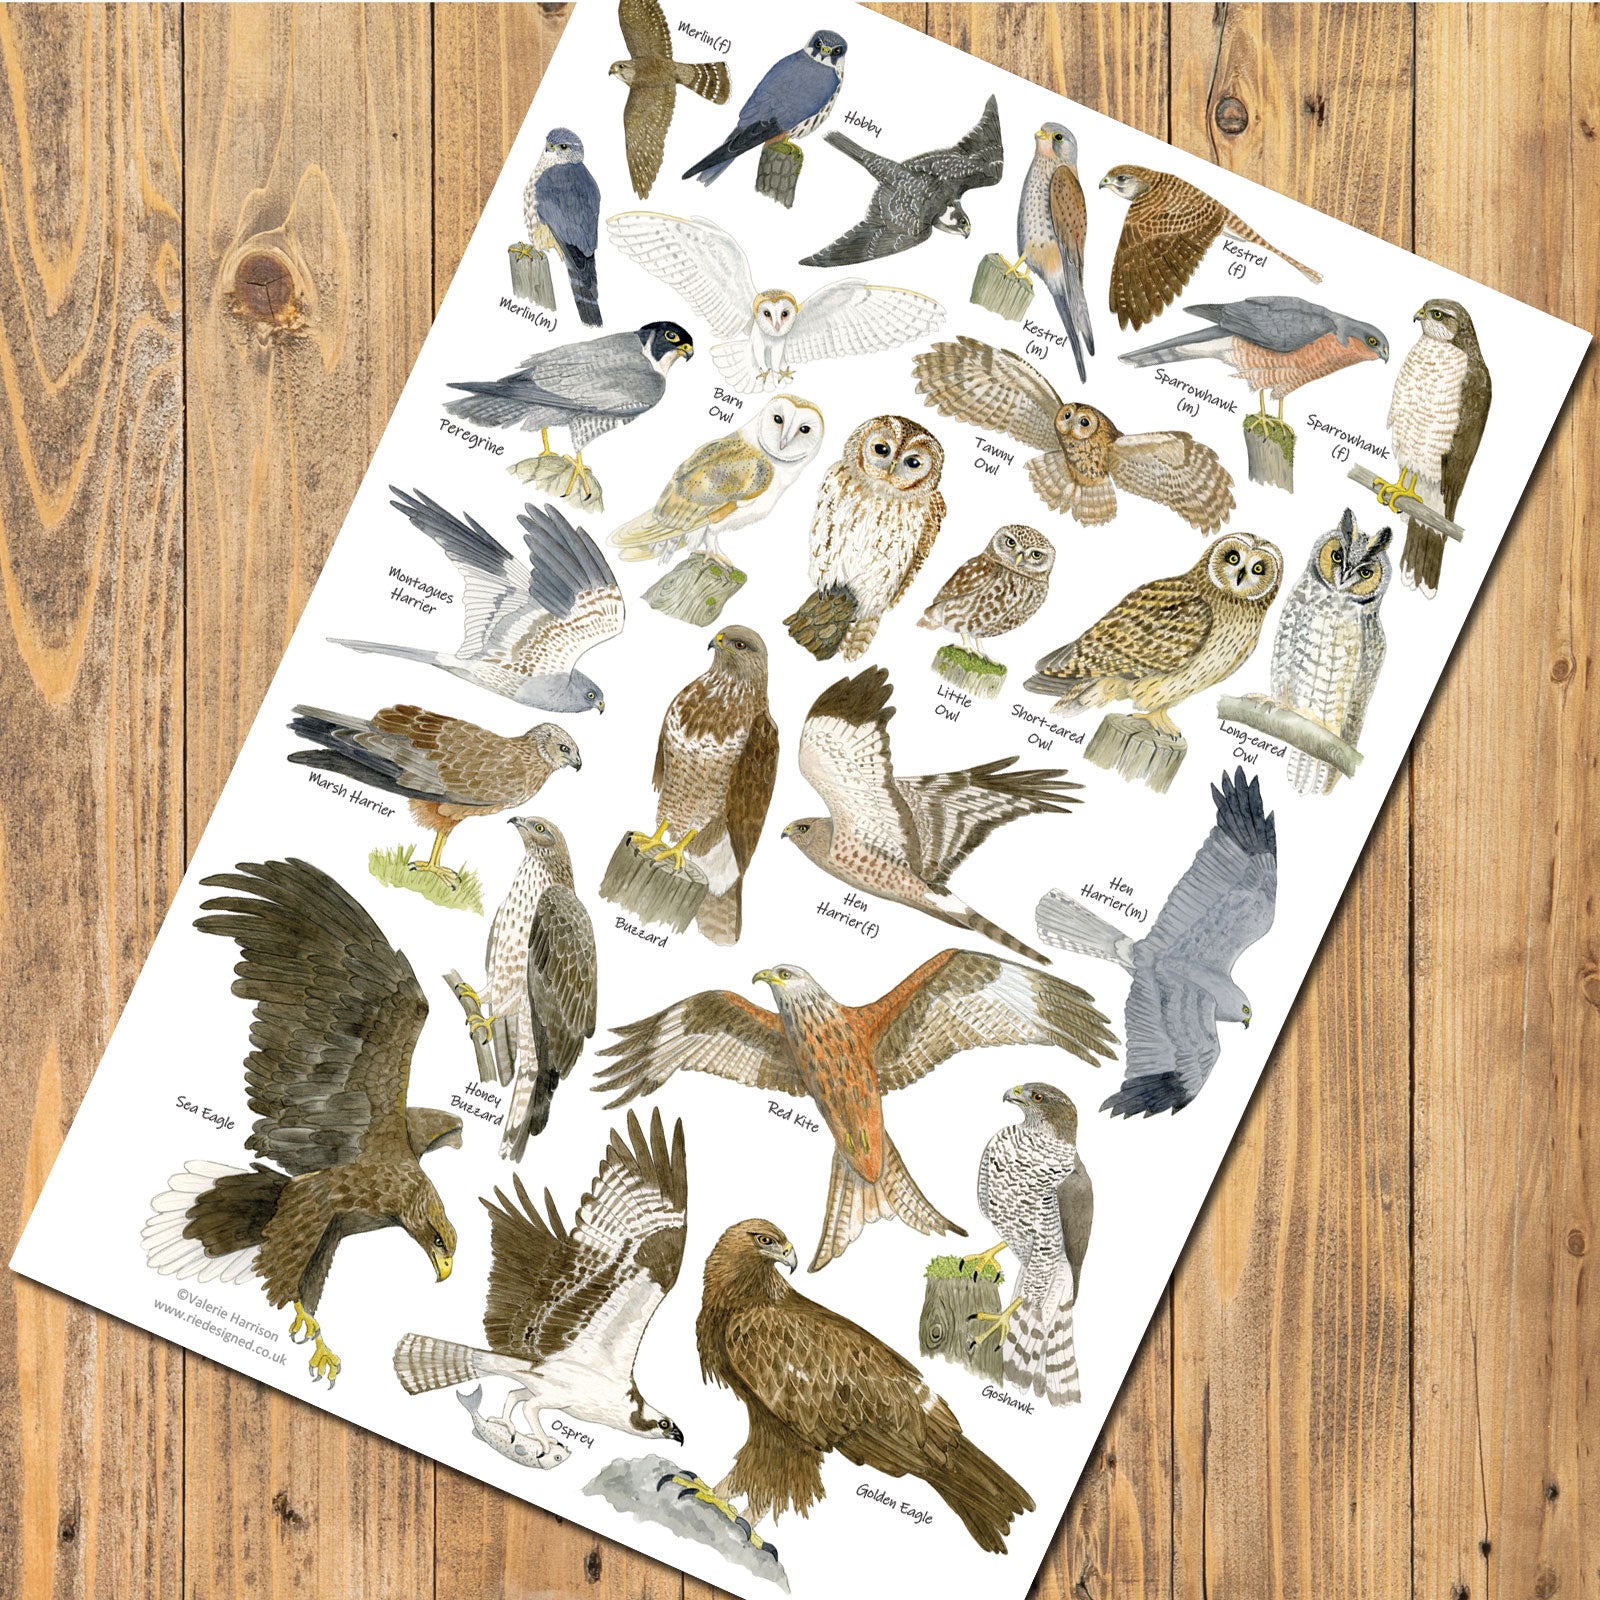 Birds of Prey Poster - A3